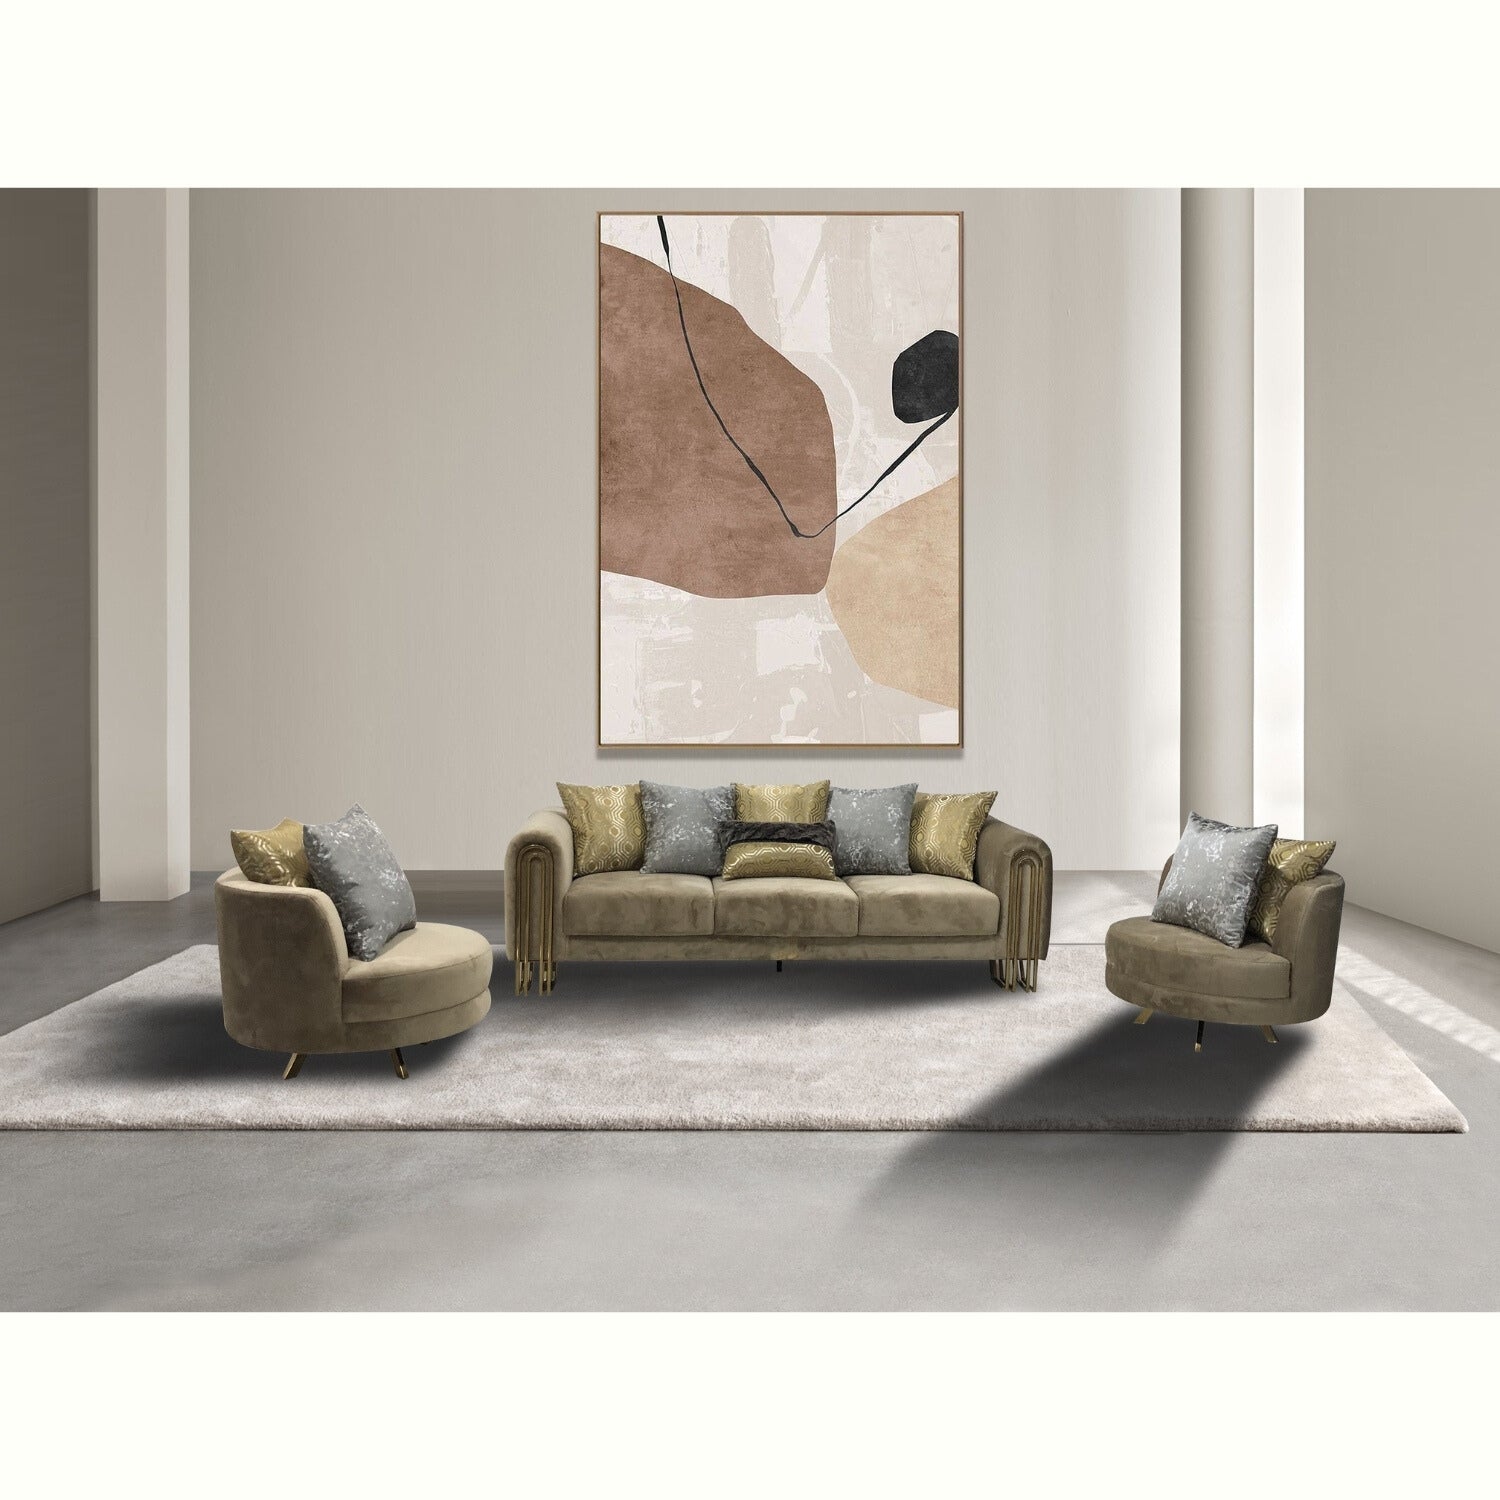 geneva-sofa-and-armchair-set-gold-metal-base-sienna-brown-in-lounge